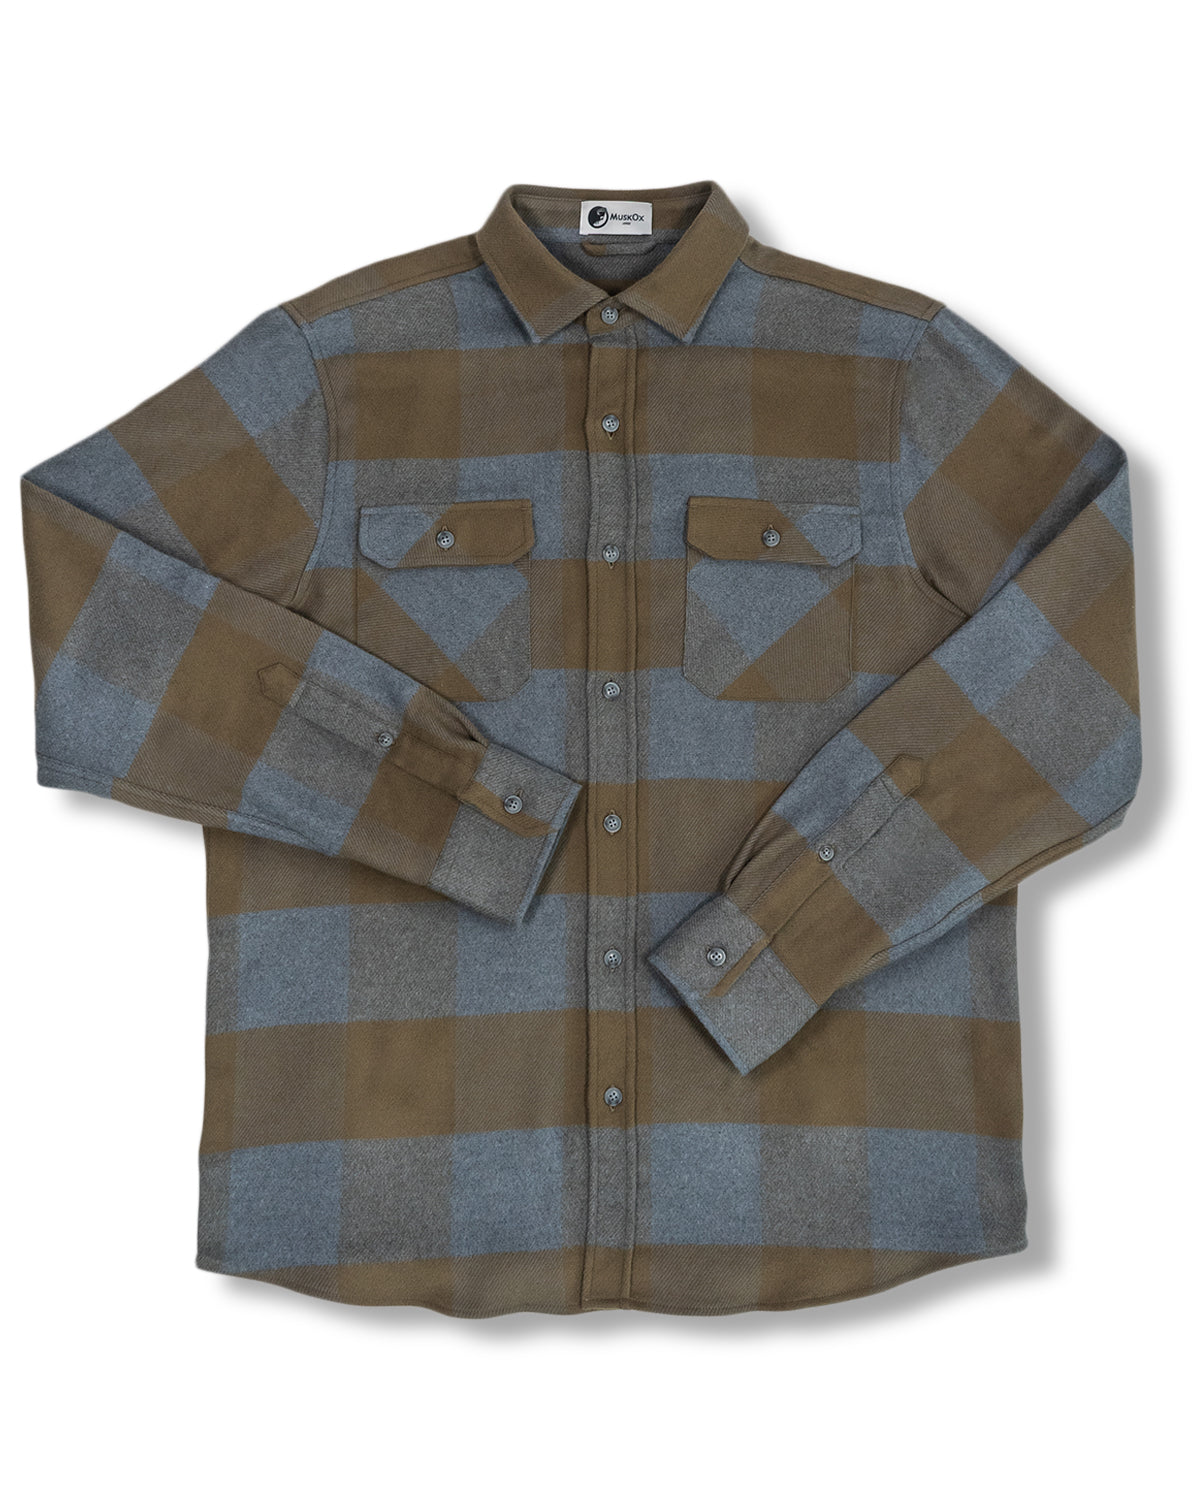 Soft Flannel Shirt for Men in 100% Cotton, Field Grand Flannel in Caper ...